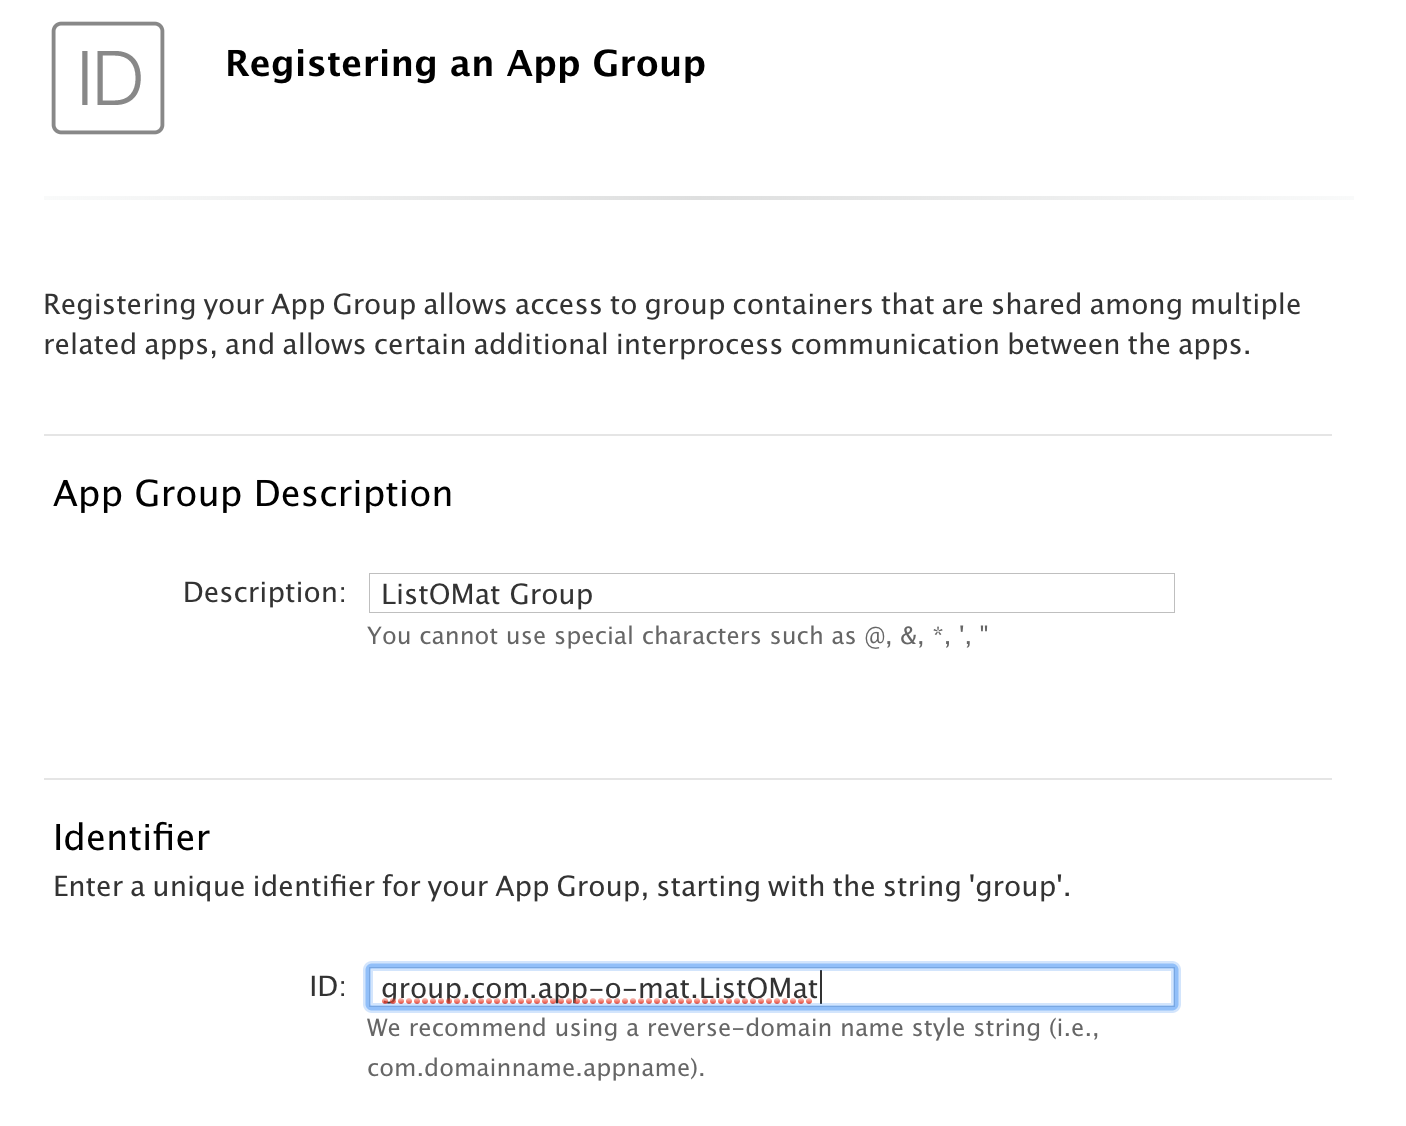 A screenshot of the Apple developer website dialog for registering an app group